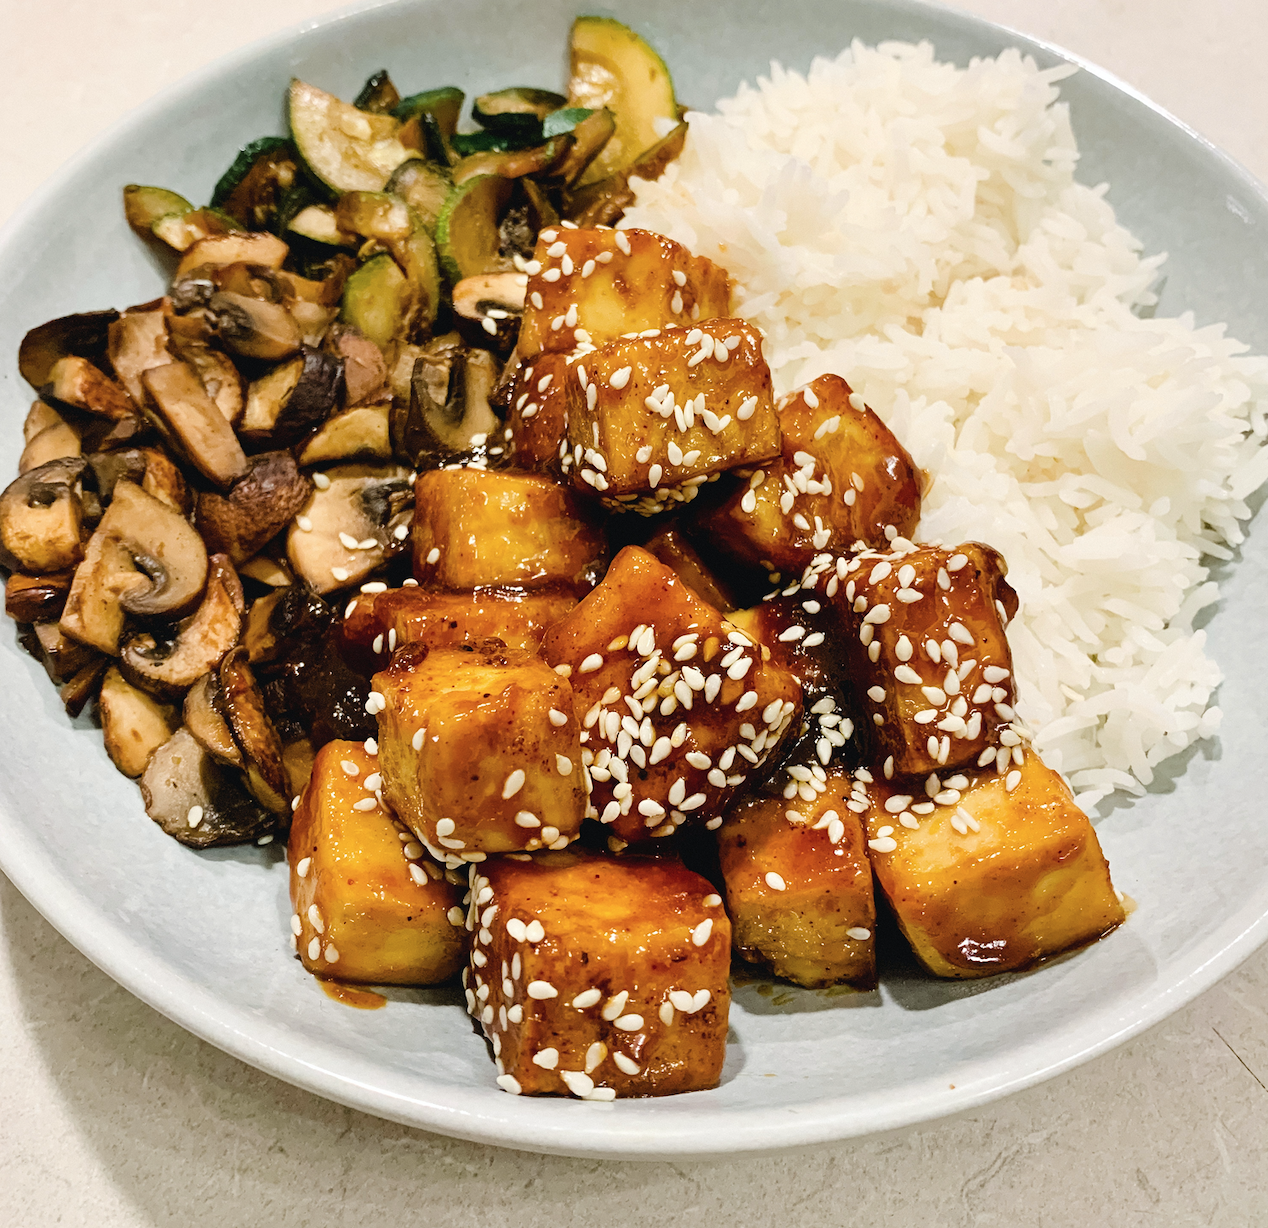 tofu, a popular vegan protein source